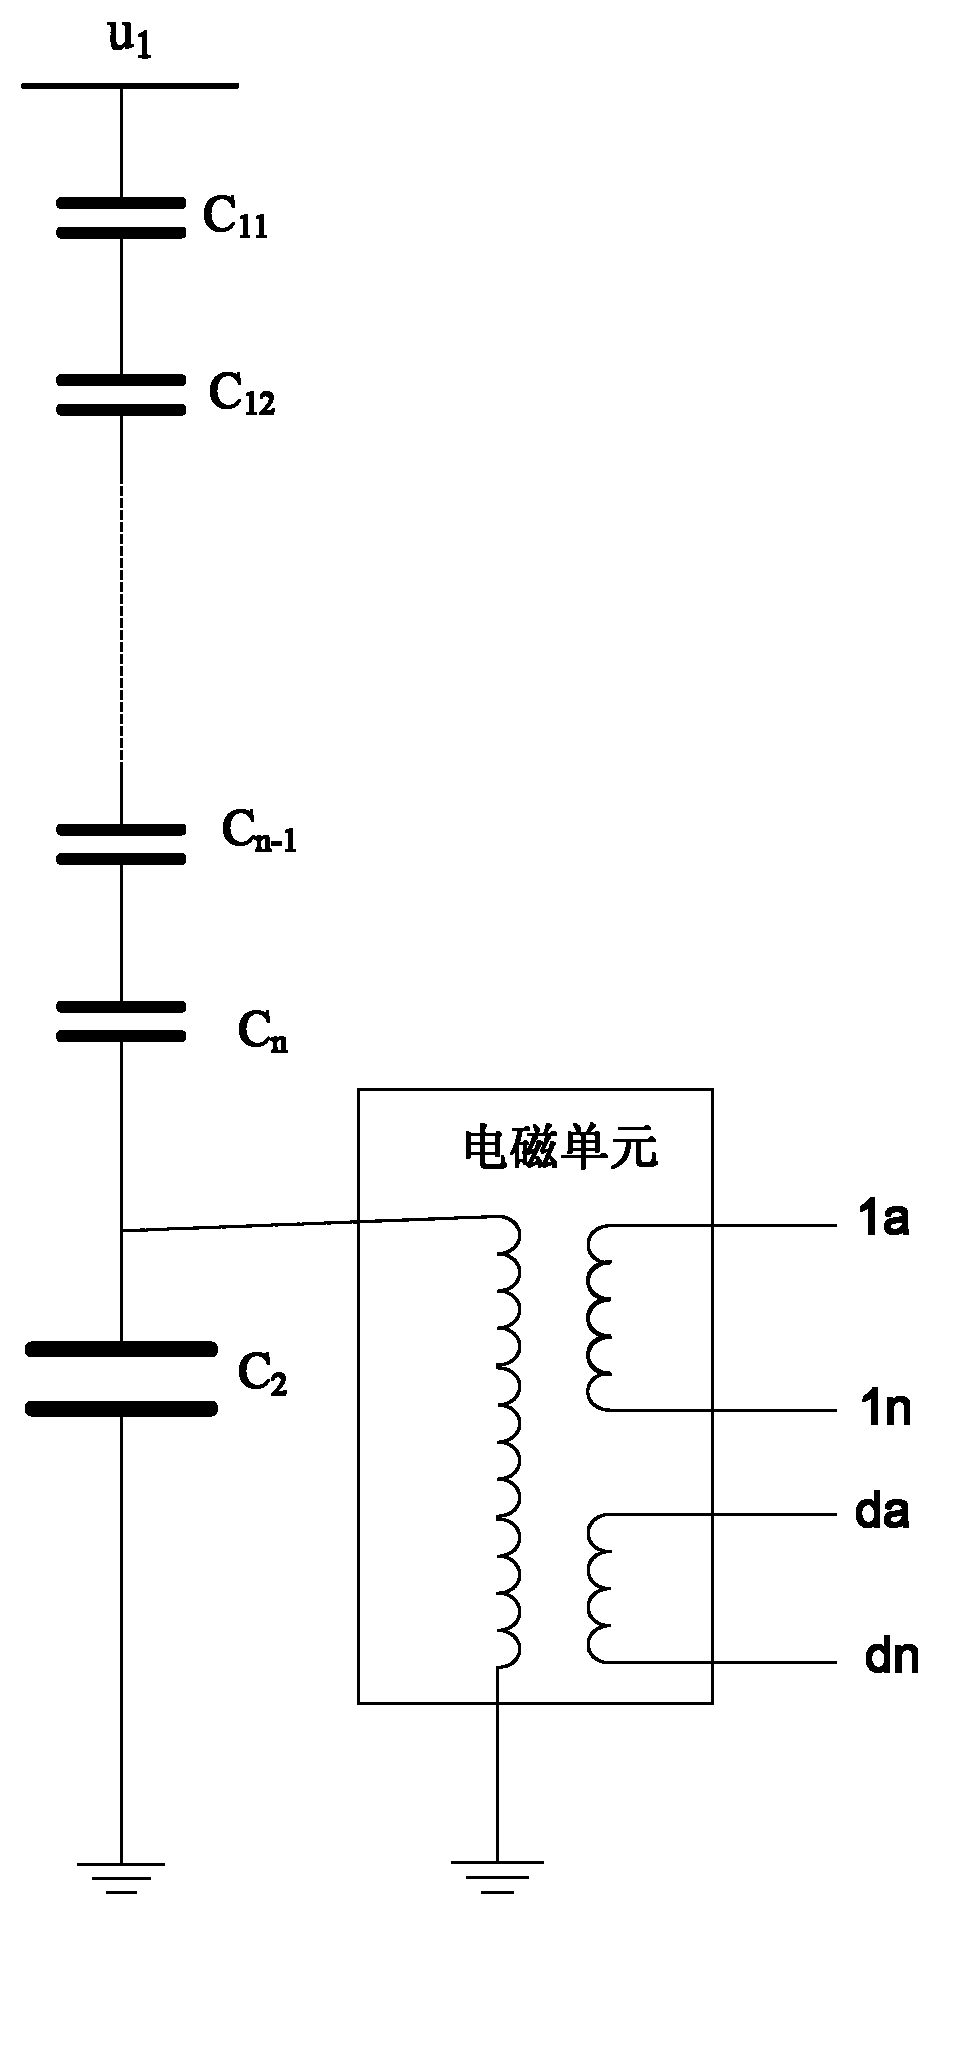 Method for fault simulation test of capacitor voltage transformer